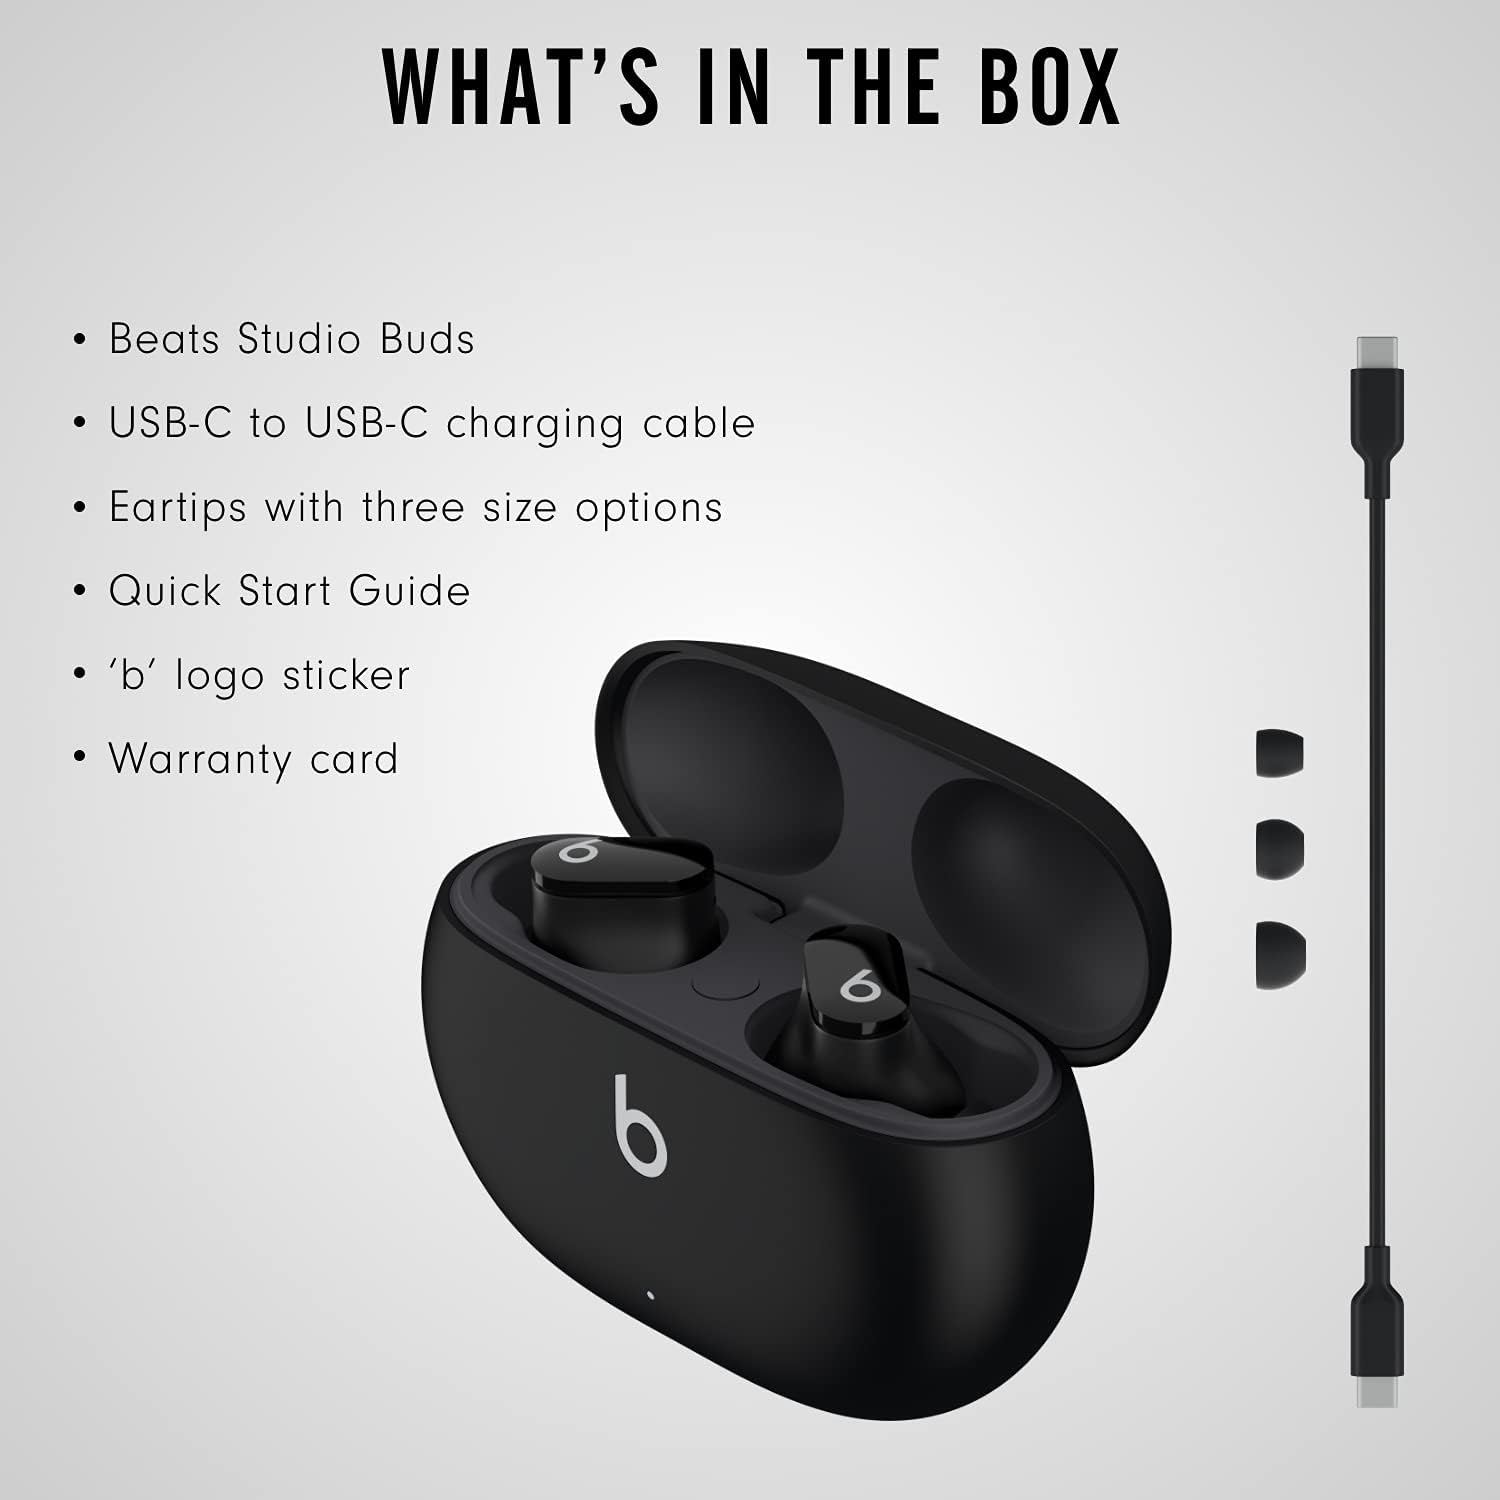 Beats Studio Buds - True Wireless Earbuds